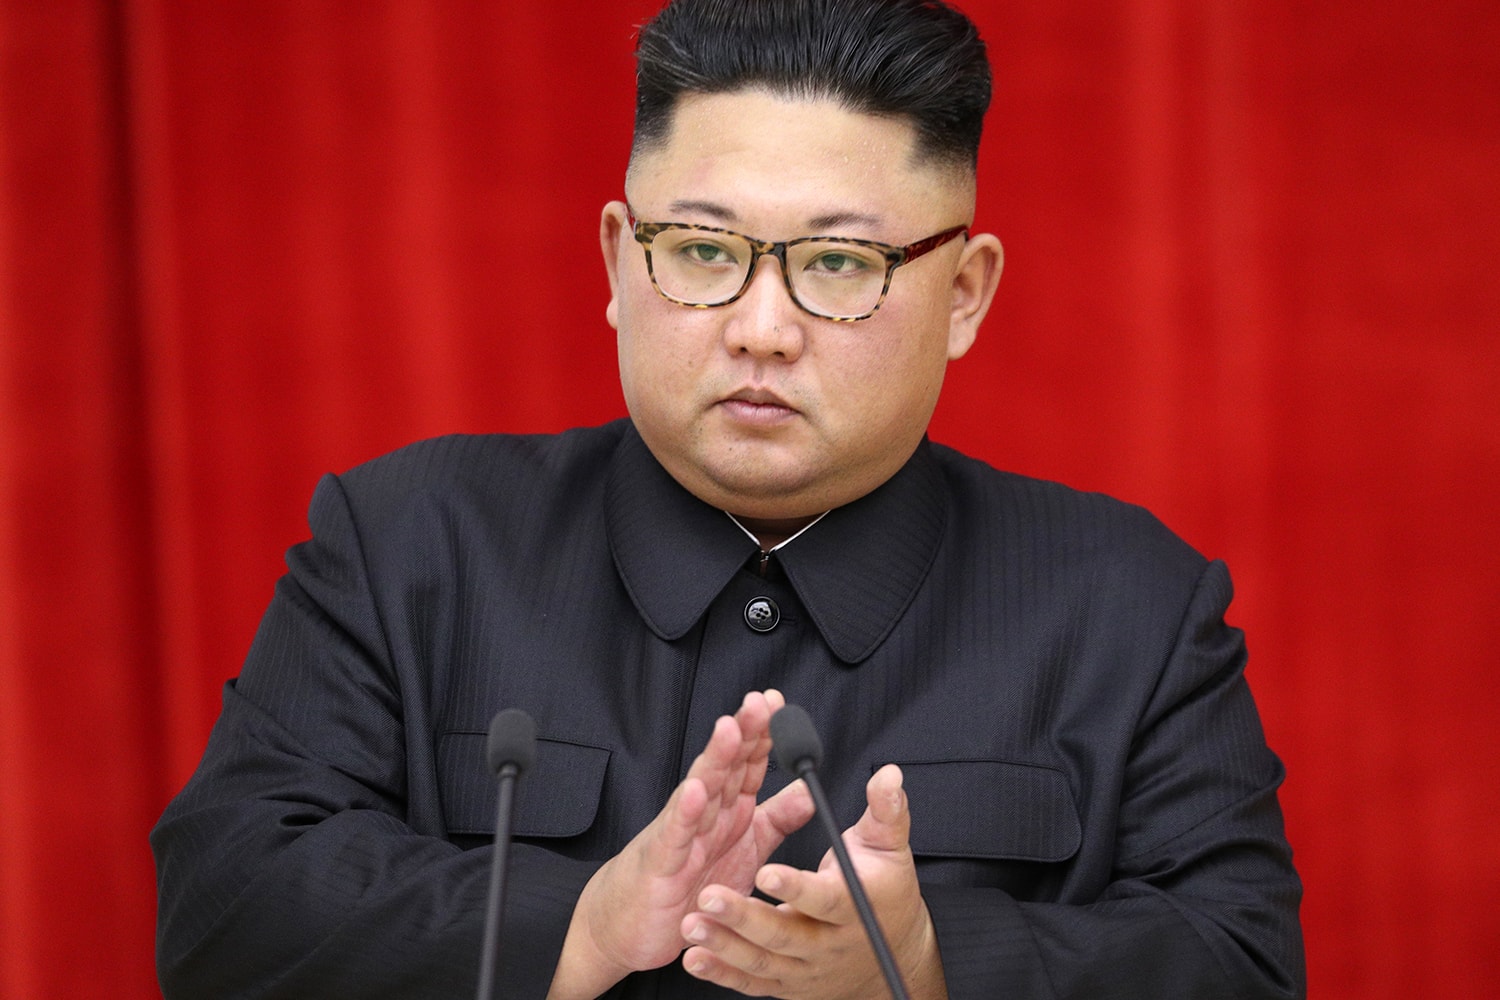 Kim Jong-un North Korea Skinny Jeans Capitalistic Lifestyle Ban Info